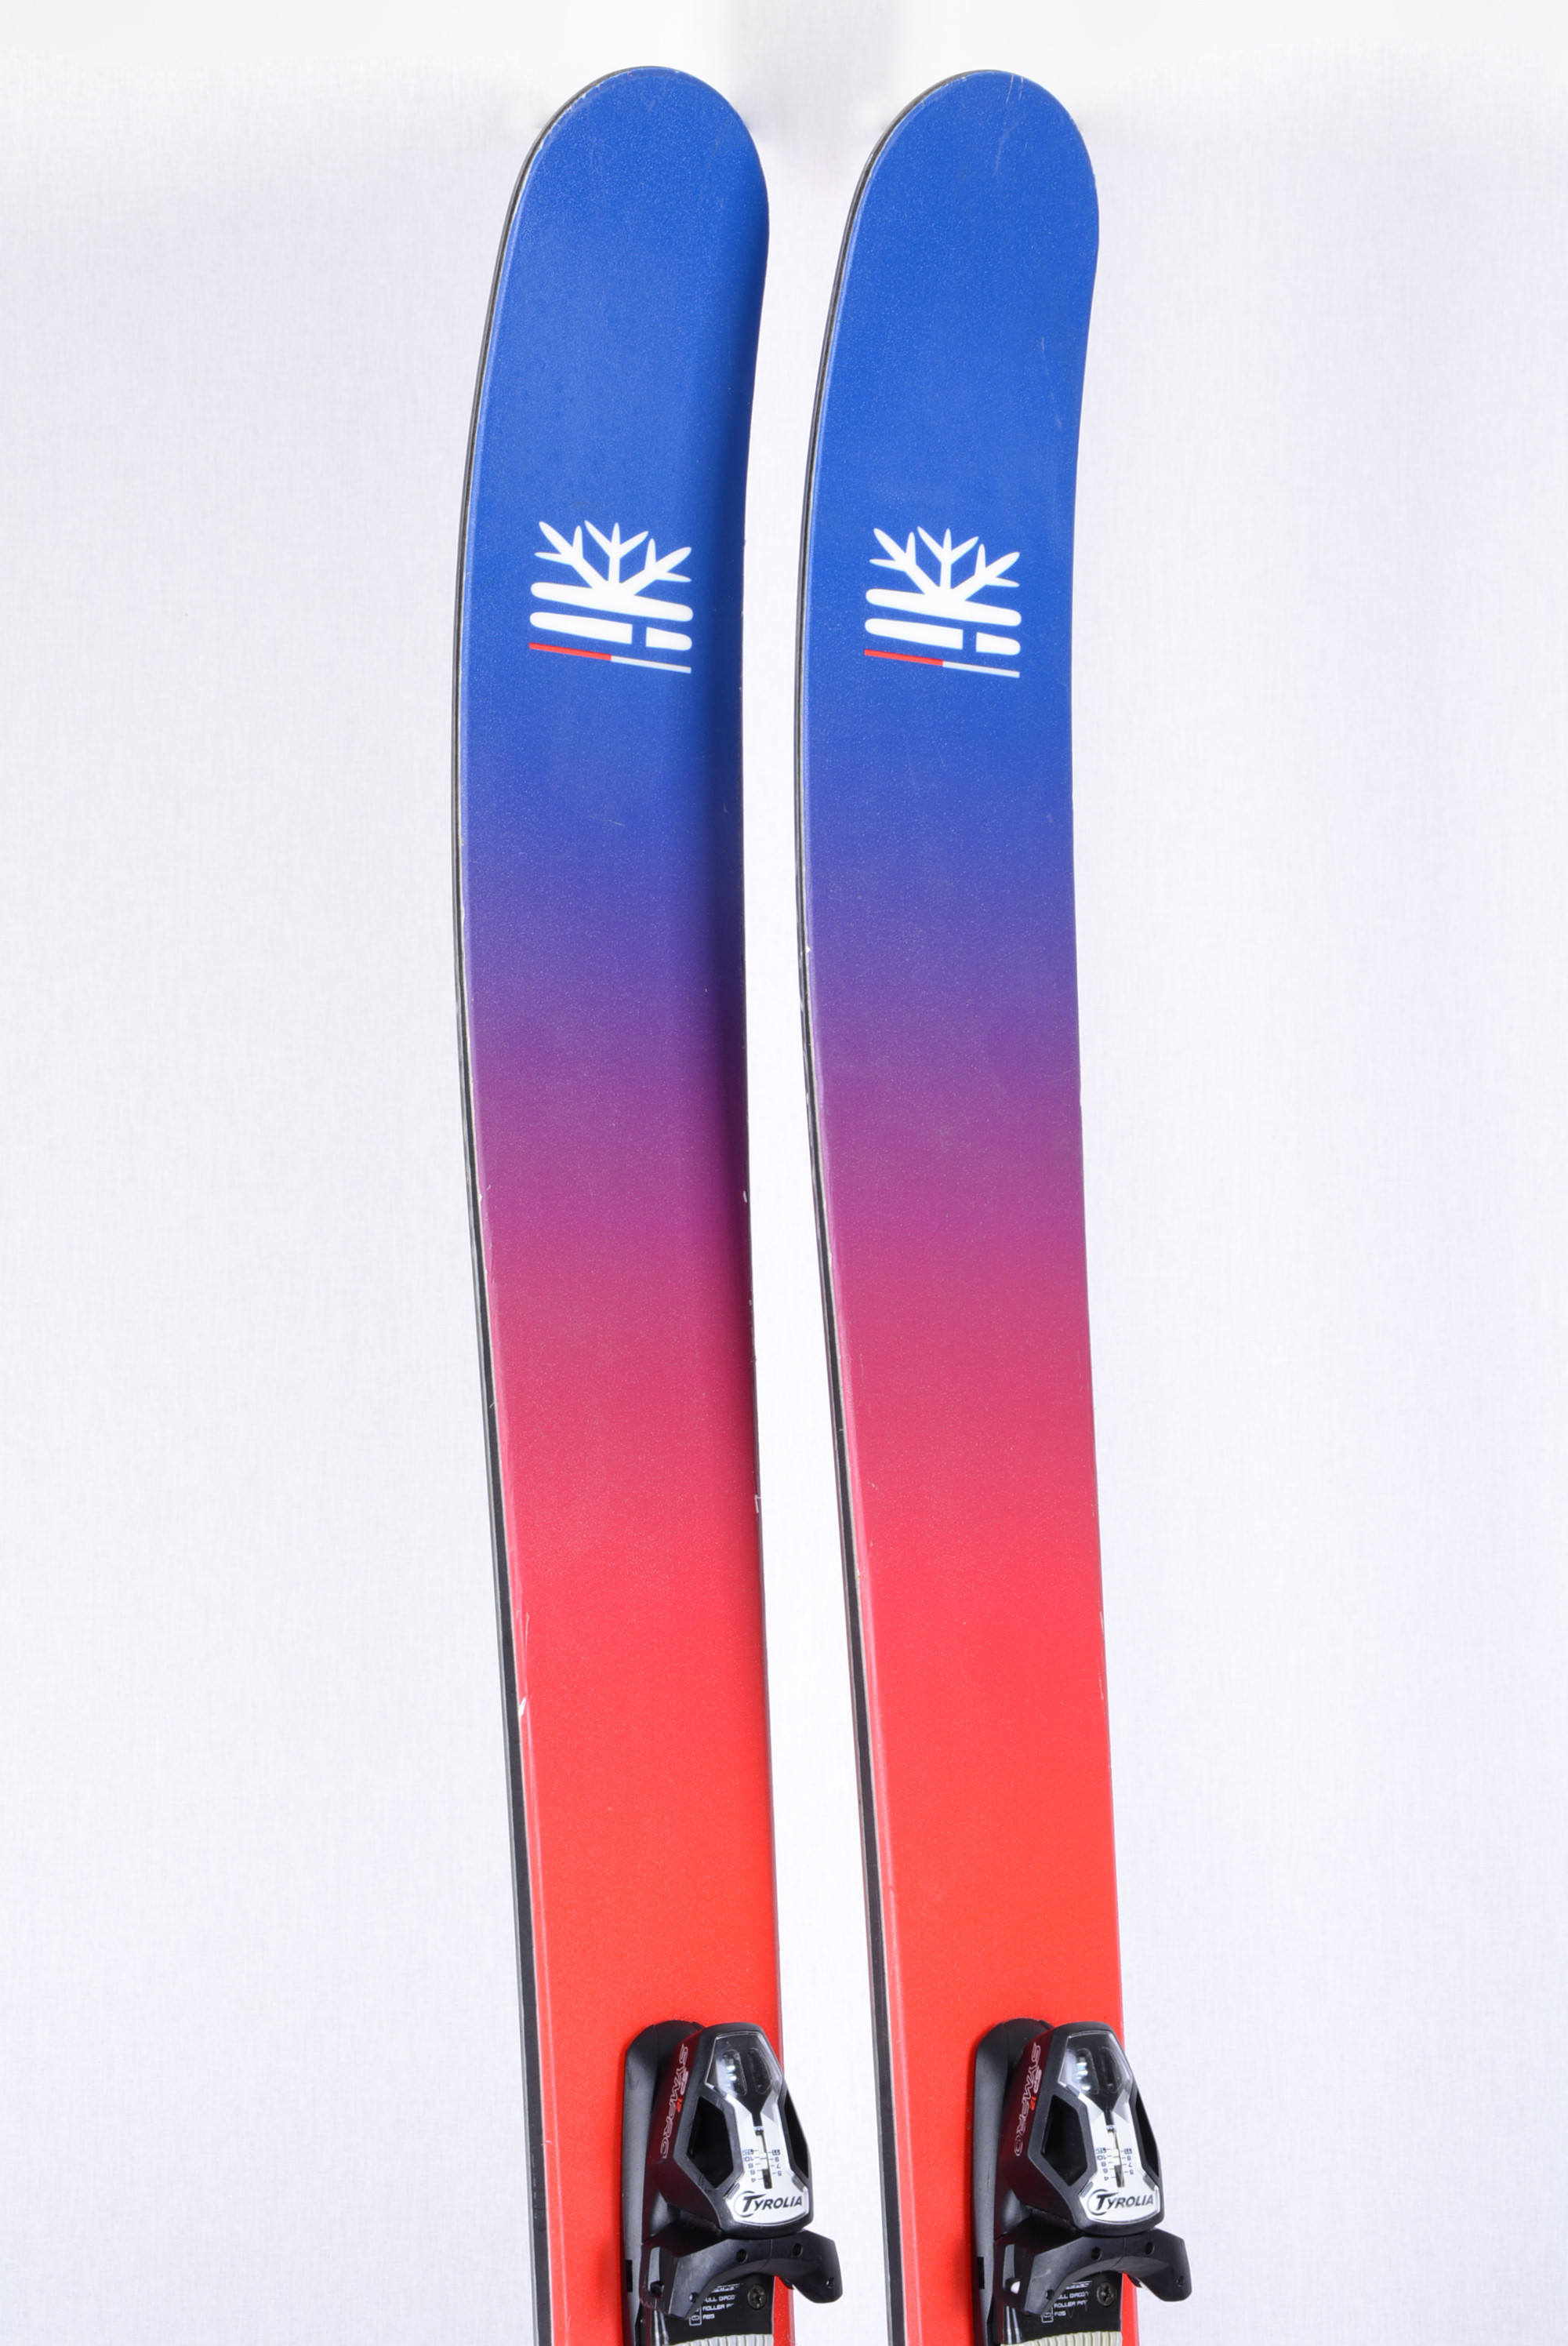 freeride skis DPS LOTUS F124 FOUNDATION, carbon, woodcore + Tyrolia SP 12 (  TOP condition )